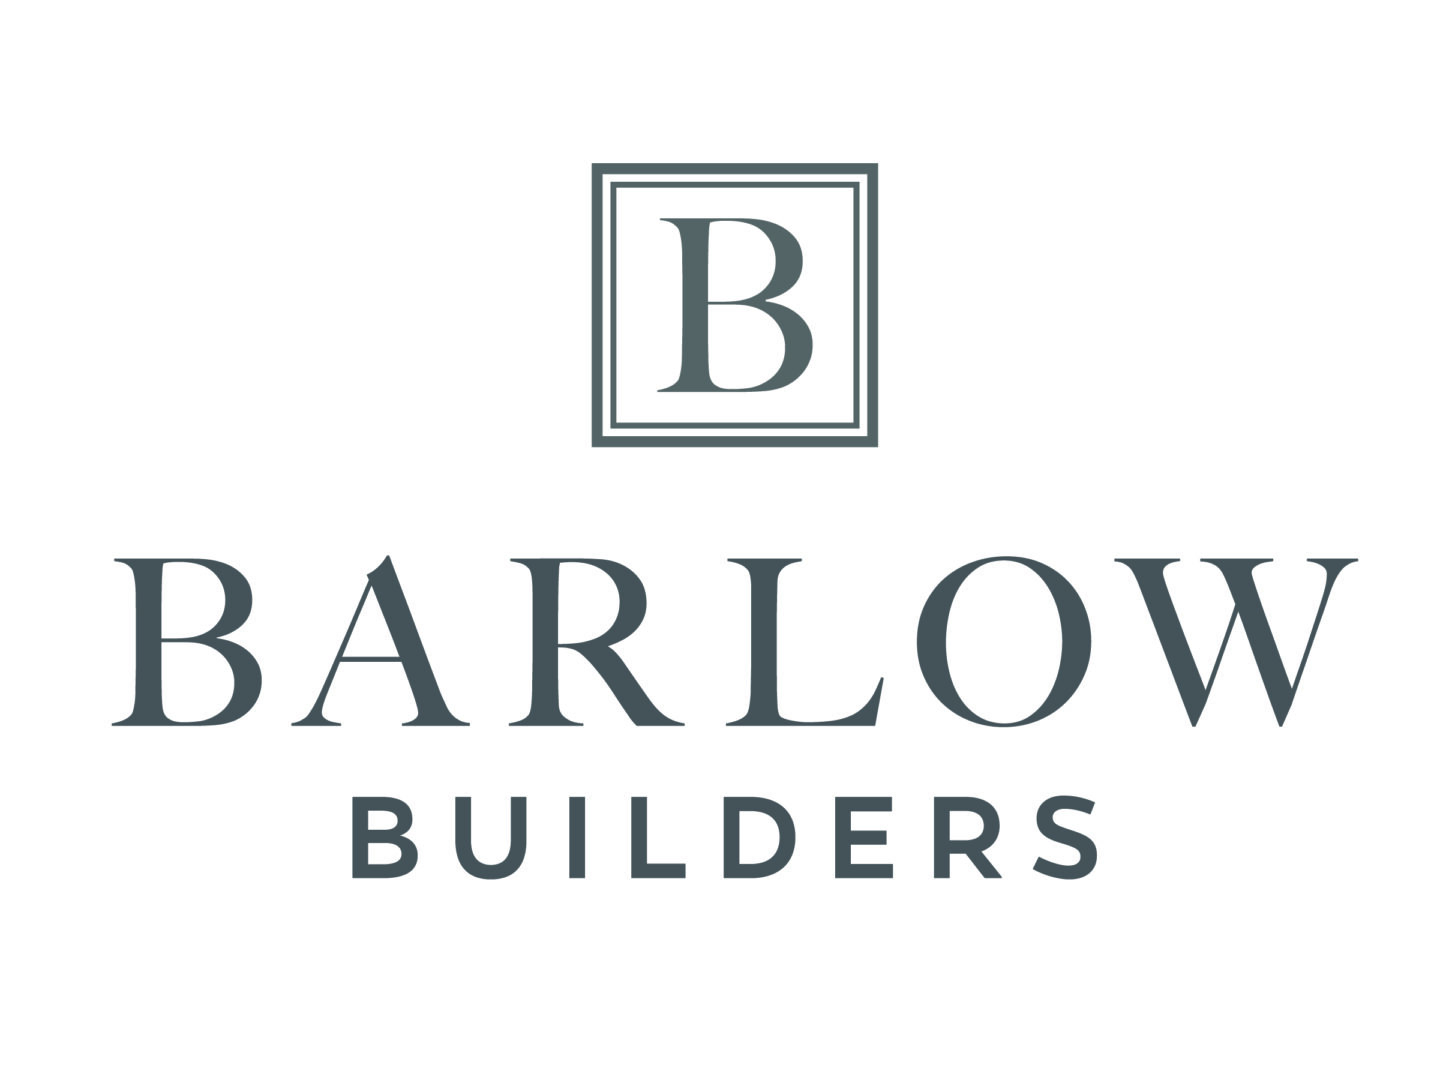 A logo of barlow builders